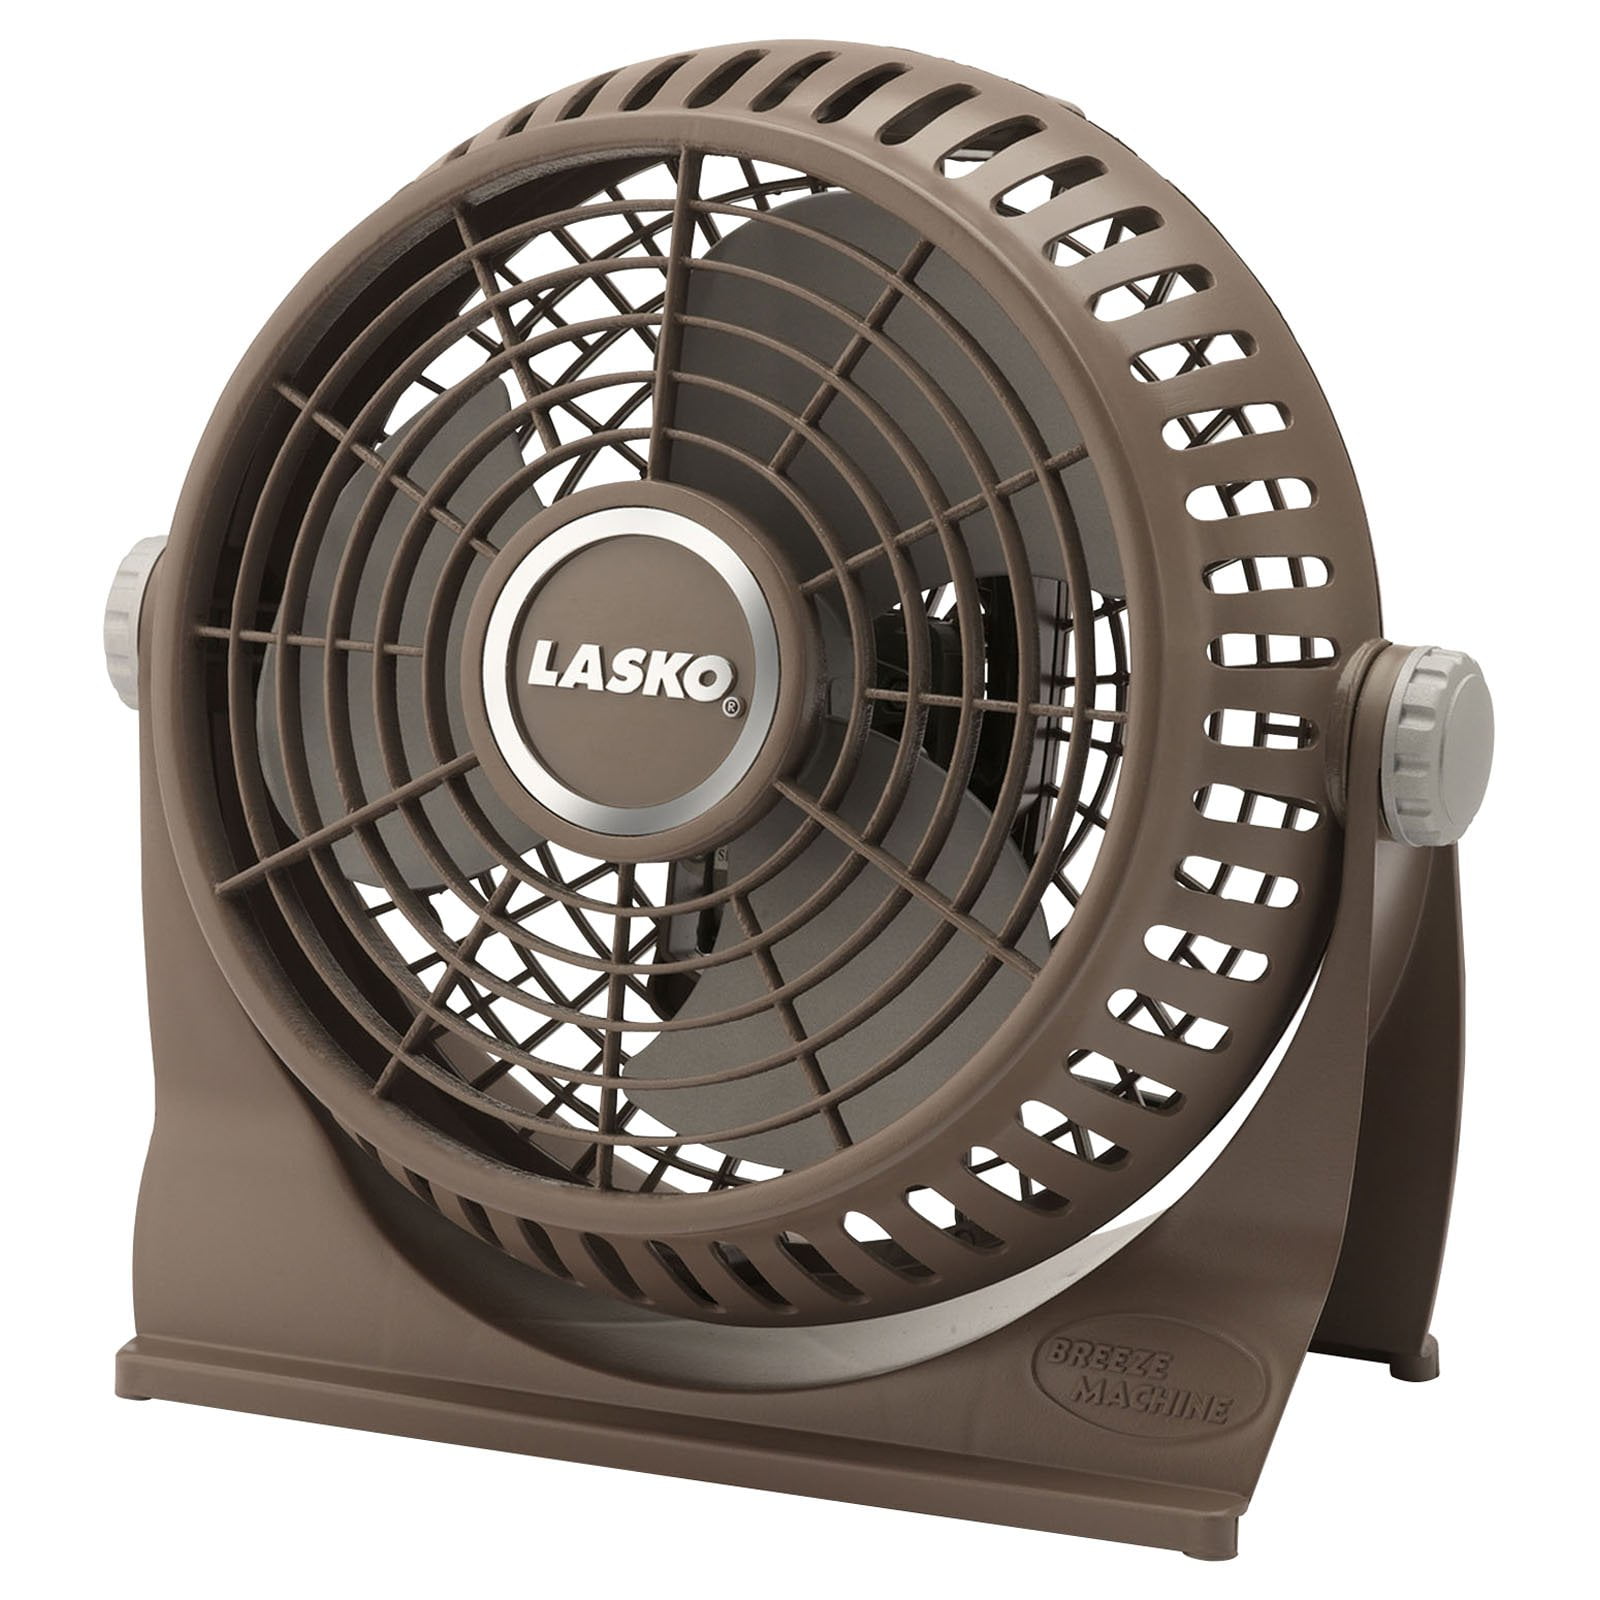 Lasko Air Flexor High Velocity Floor or Wall Fan with Remote 